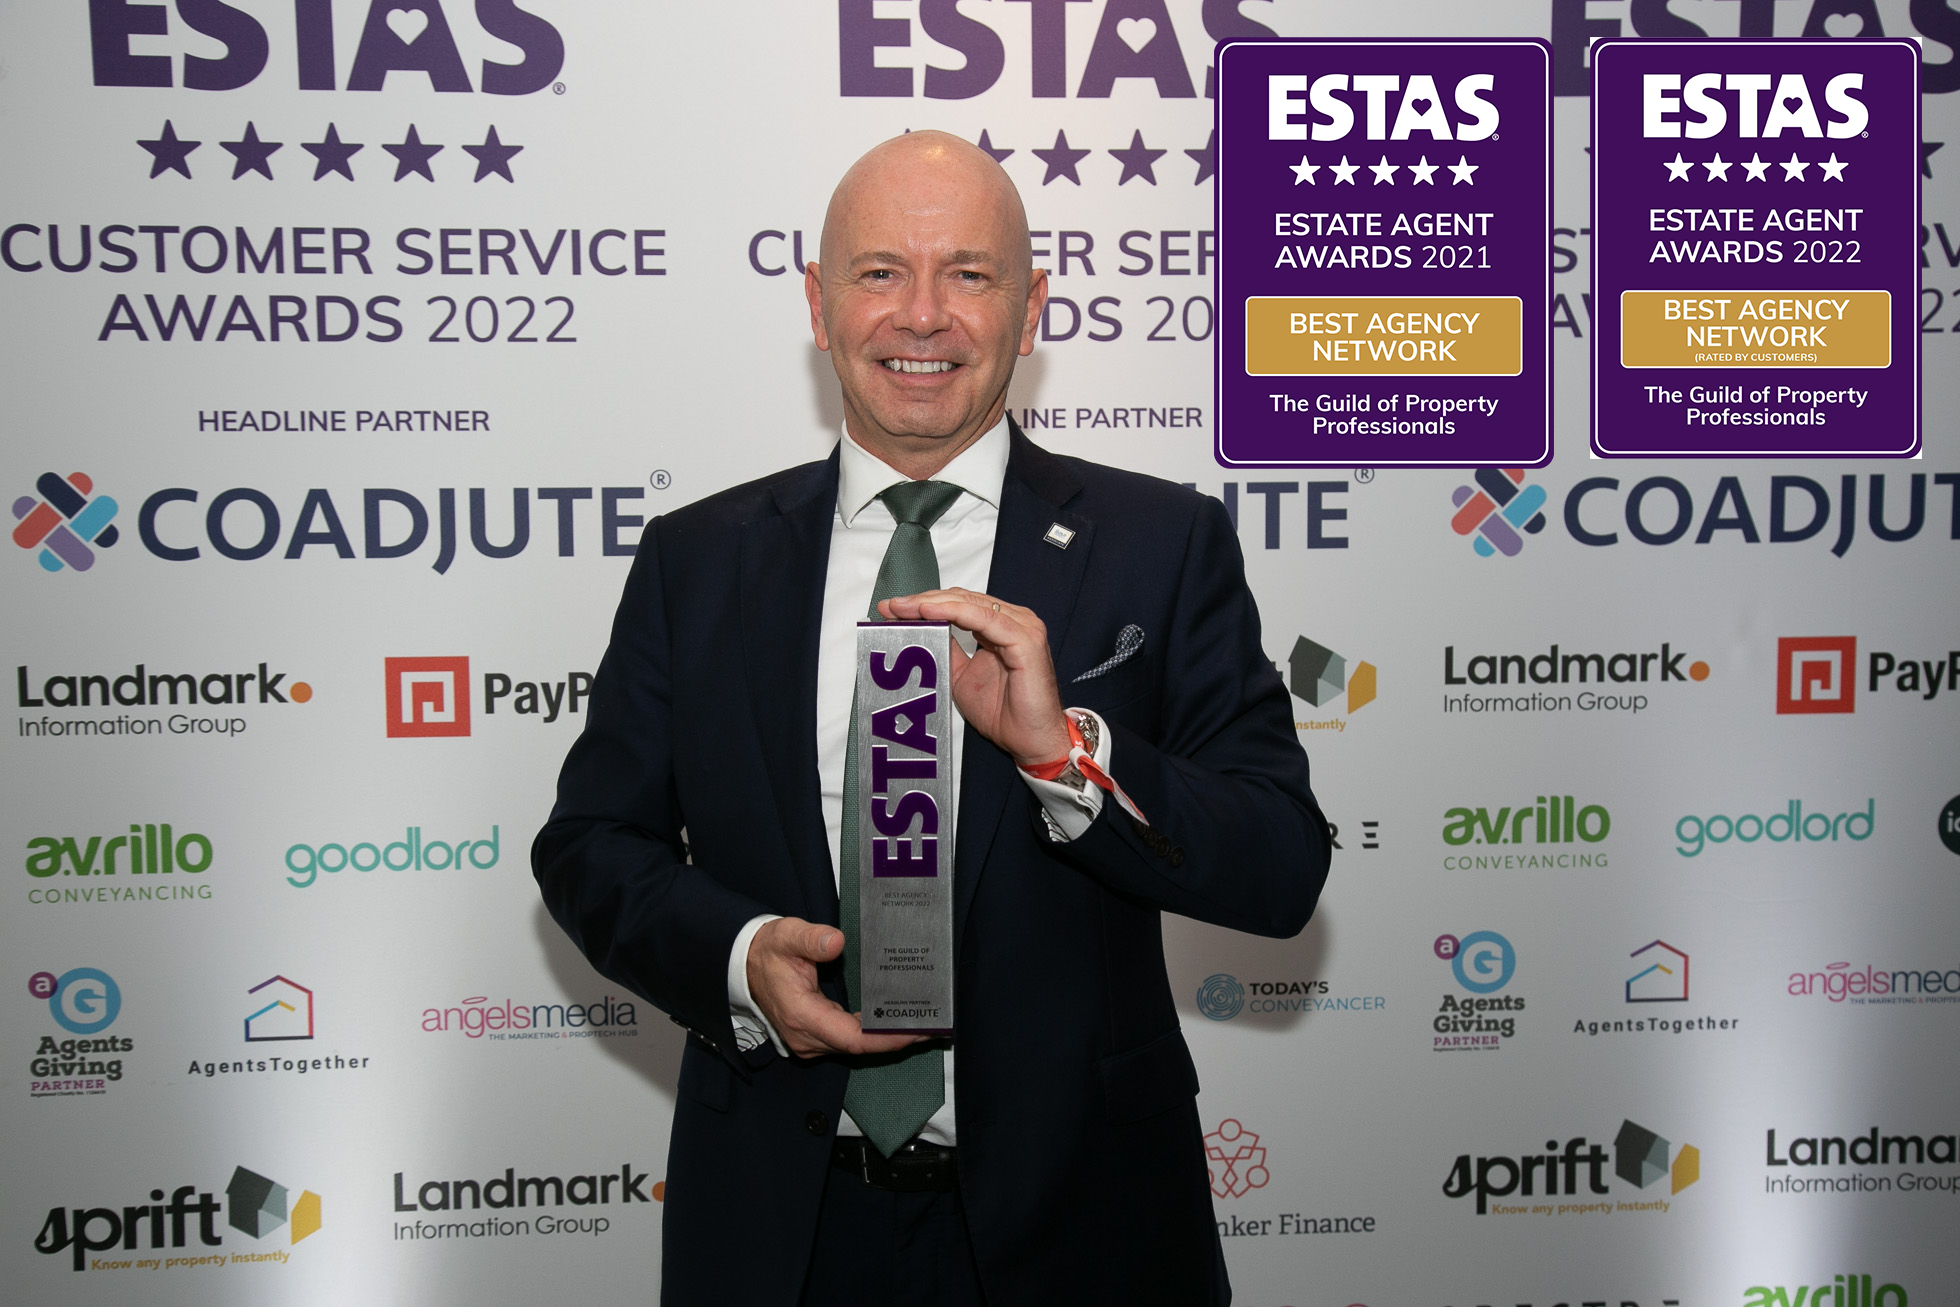 Iain McKenzie at The ESTAS Awards